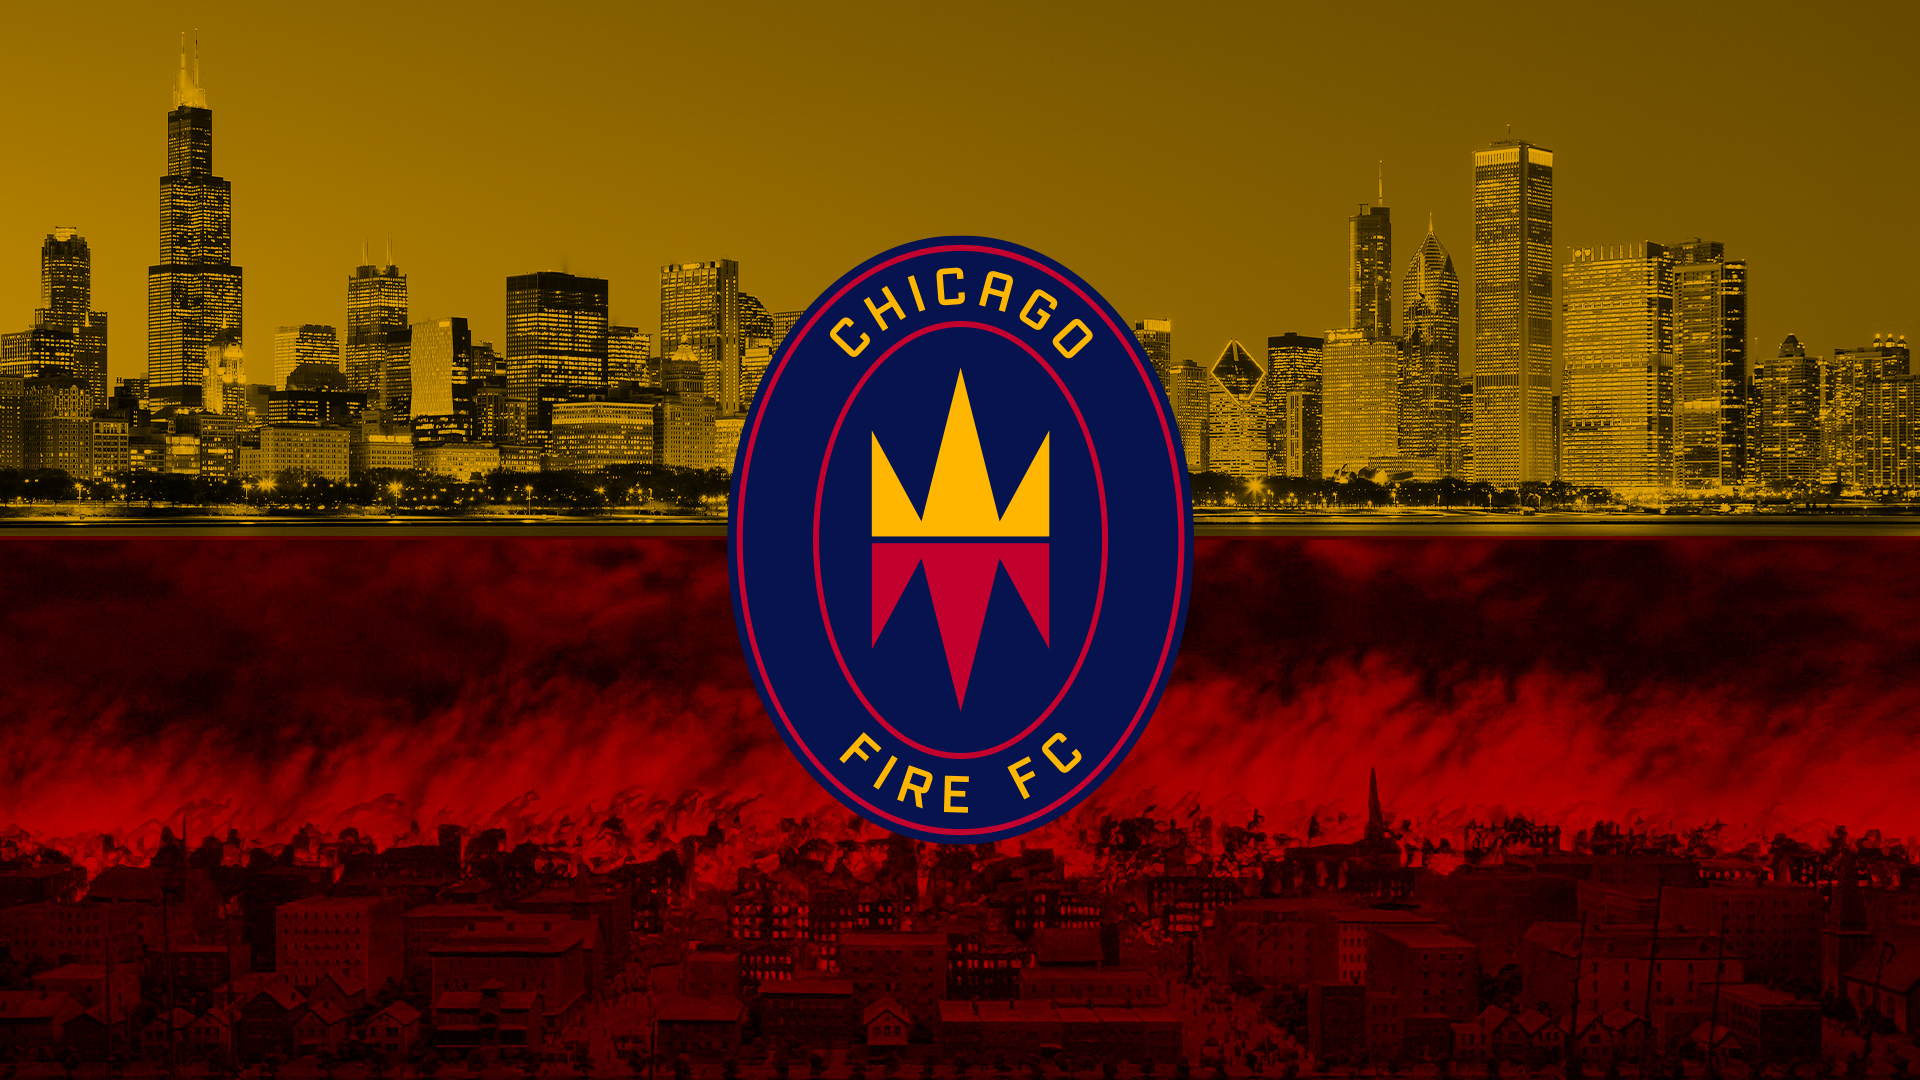 Chicago Fire Fc Logo   1920x1080 Wallpaper   teahubio